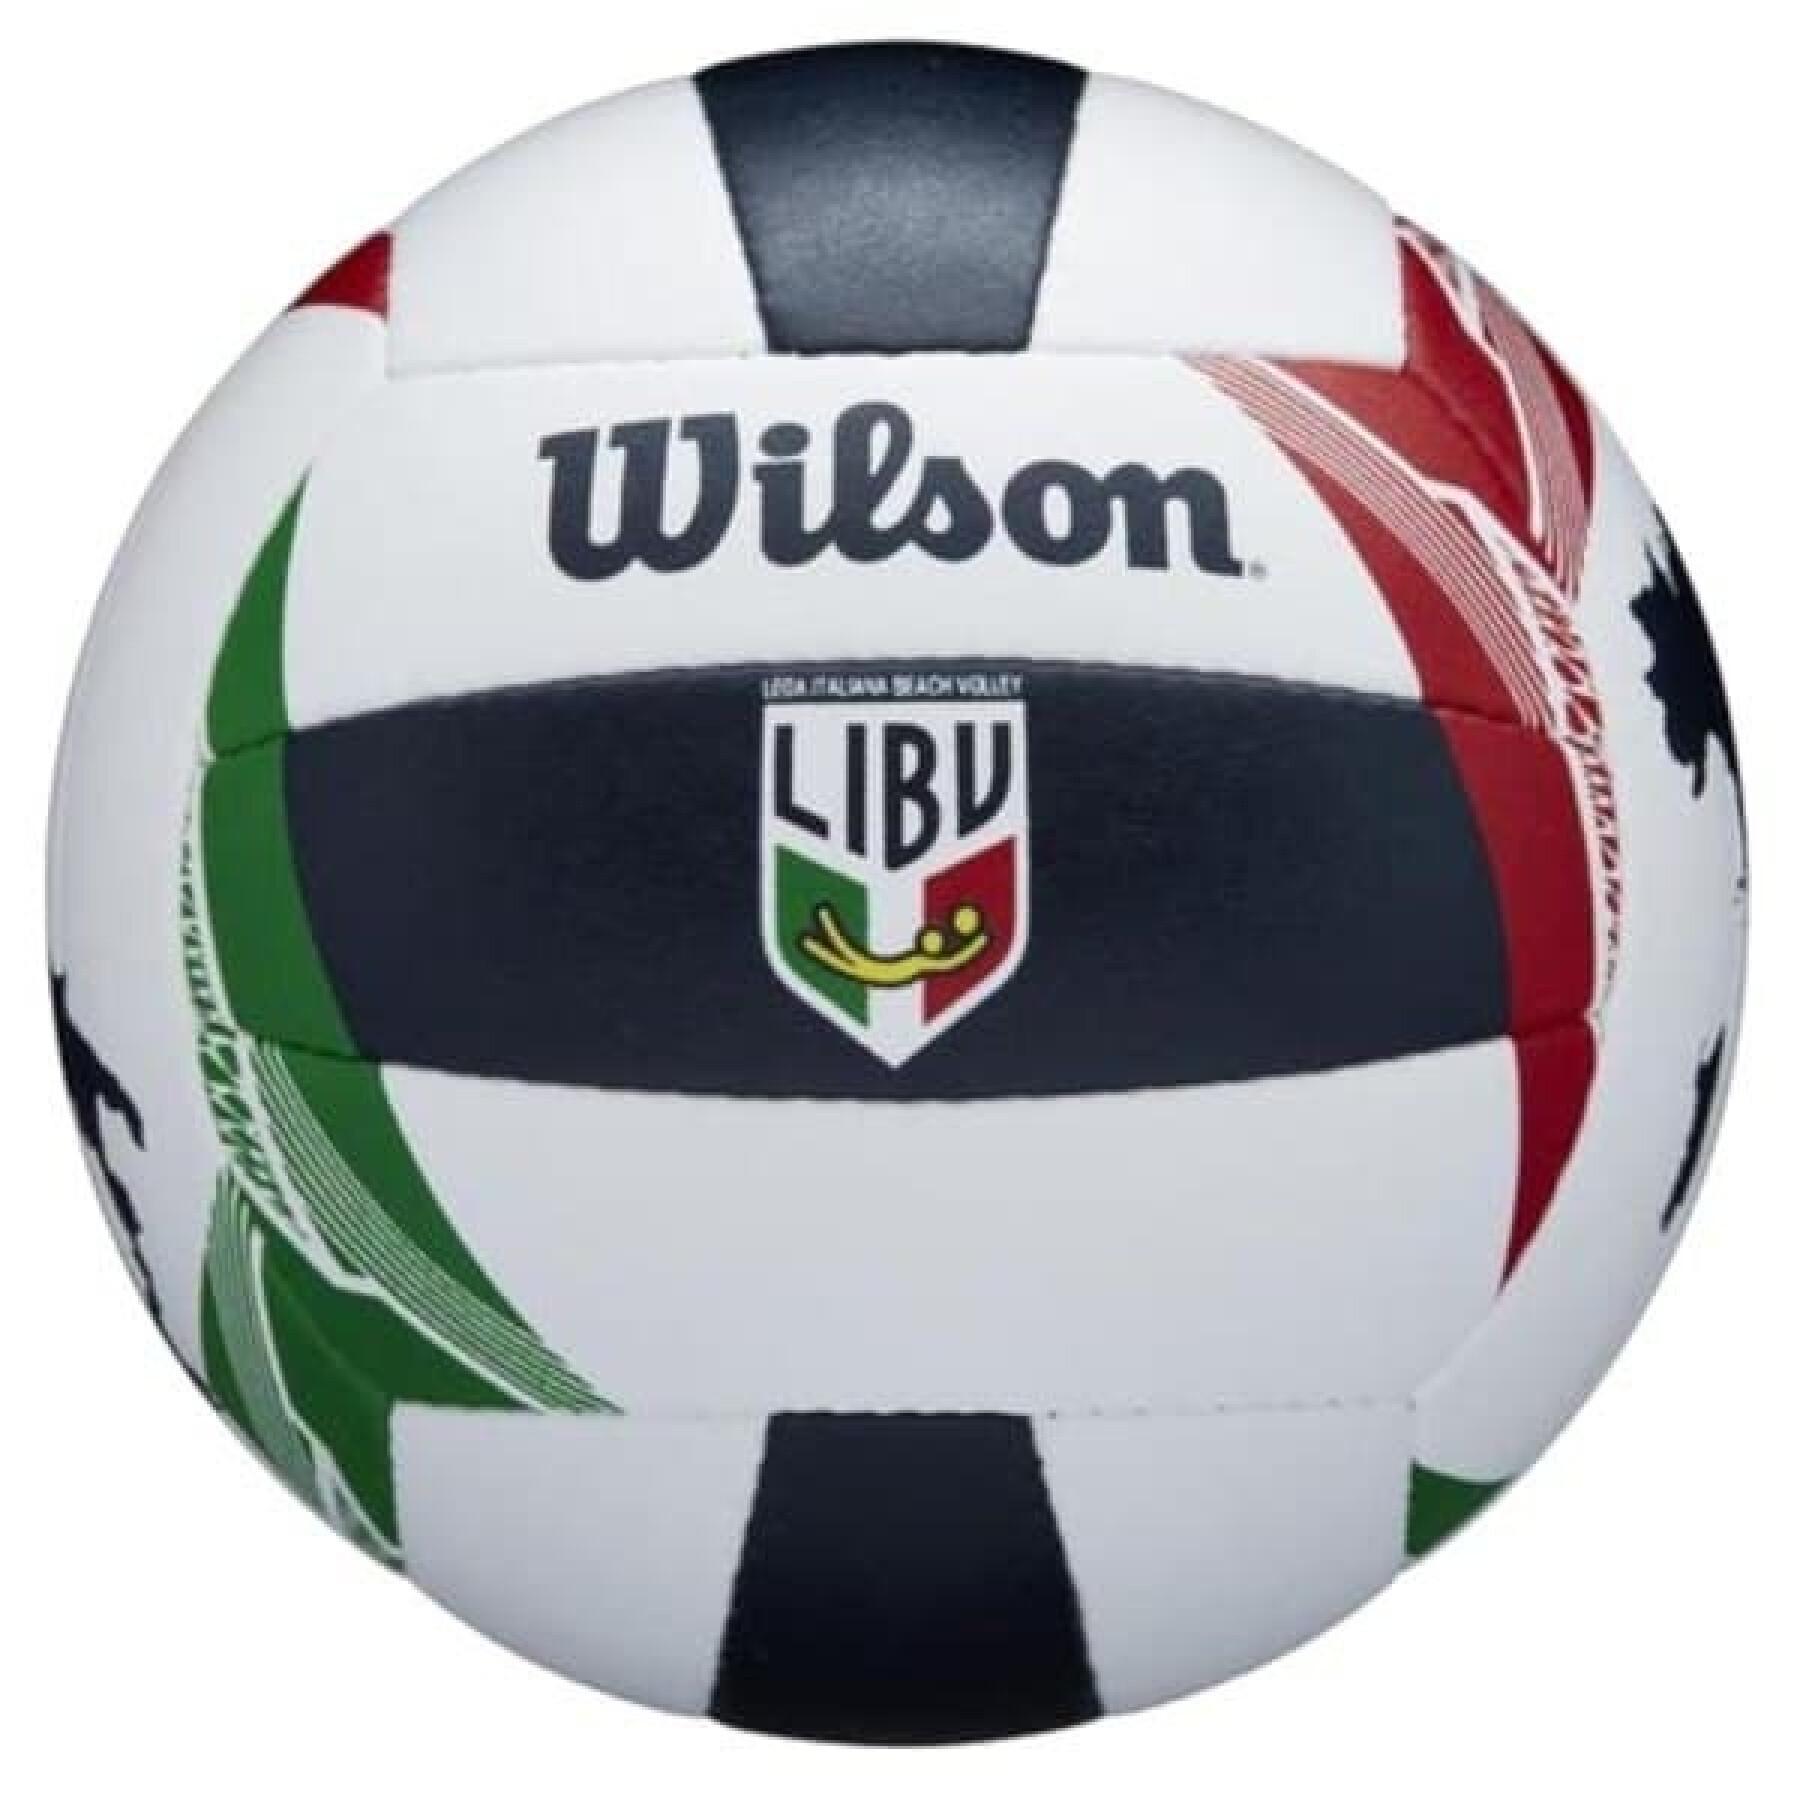 Balon Wilson Italian League VB Official Gameball